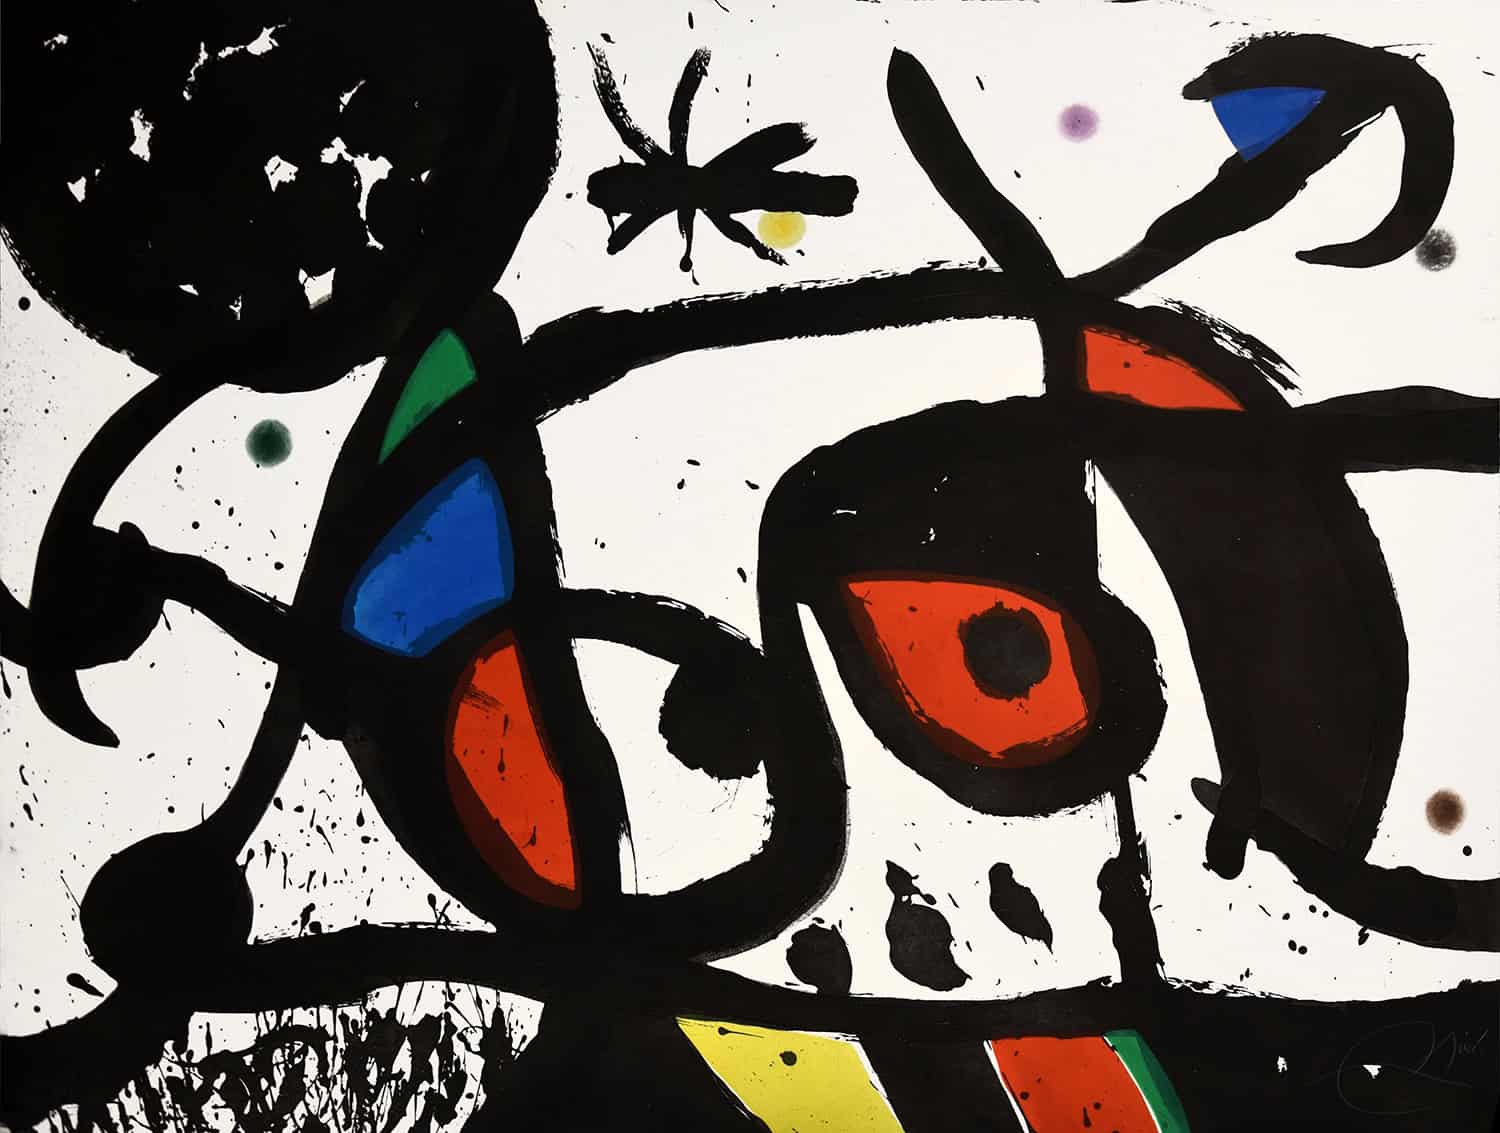 Joan Miró, Charivari (Racket), 1976